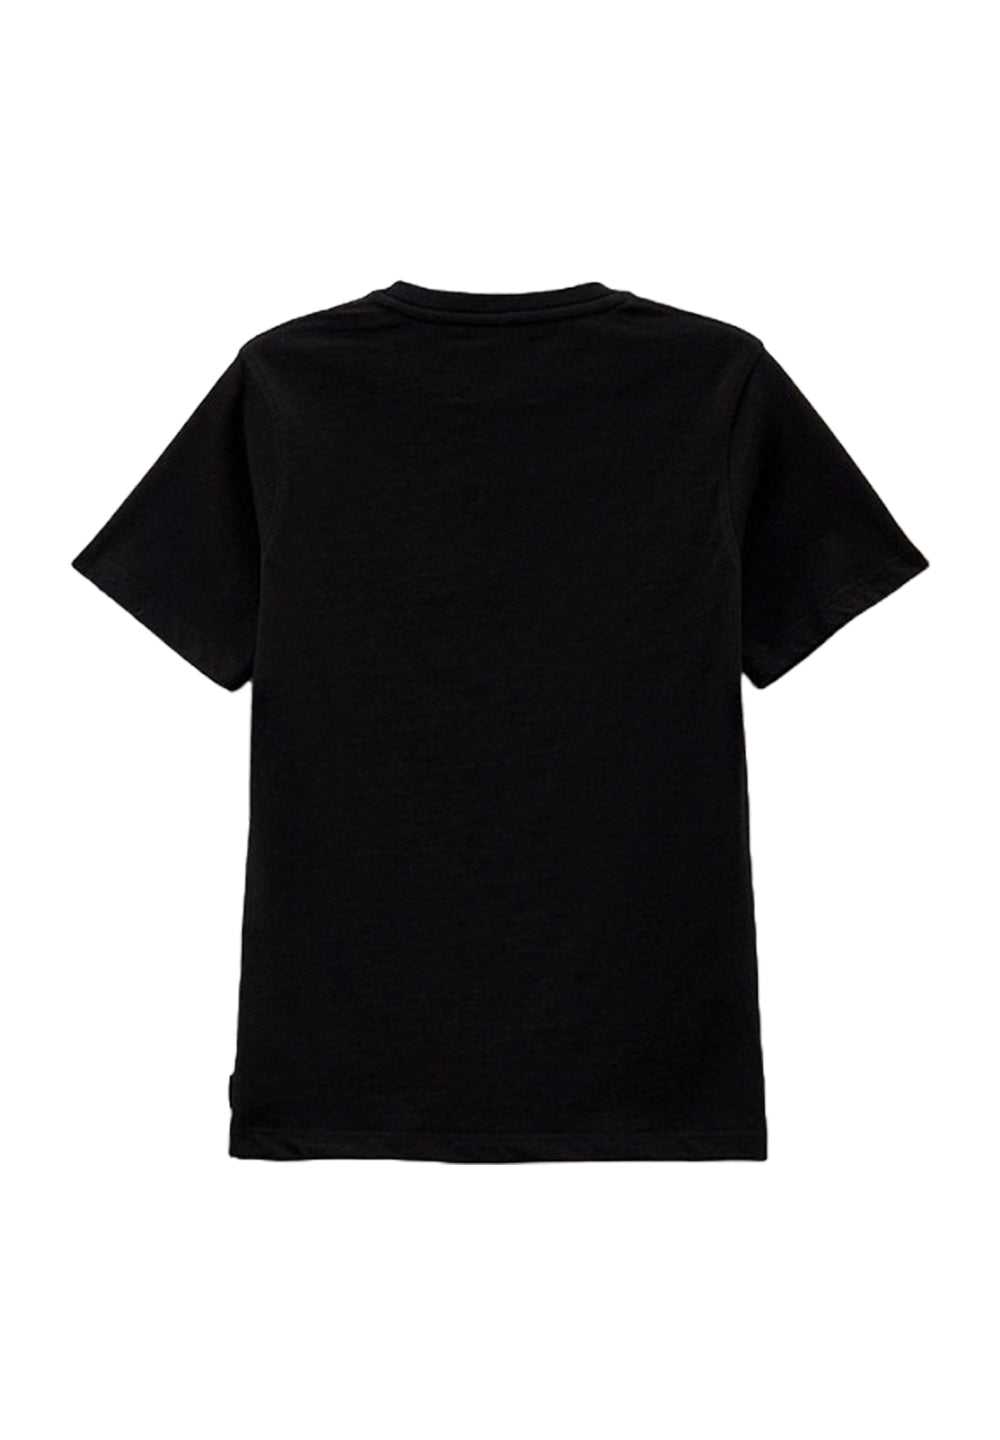 Black t-shirt for boy